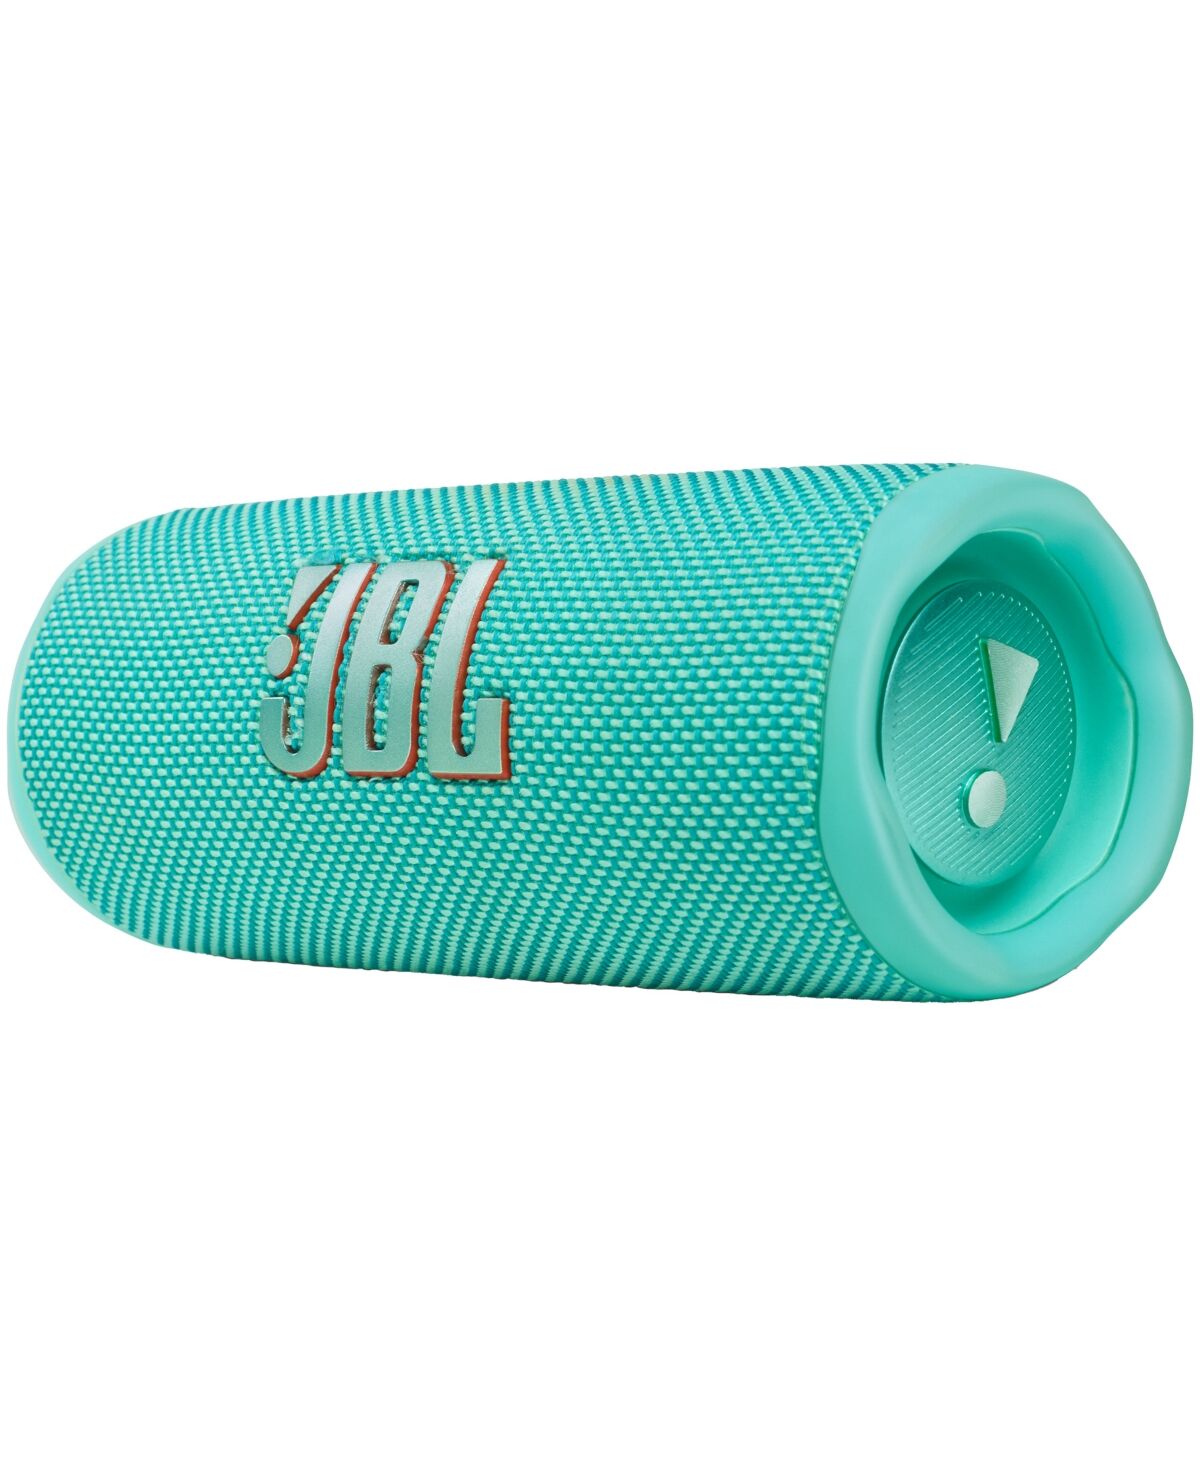 JBL Flip 6 Water-Resistant Wireless Bluetooth Speaker - Teal